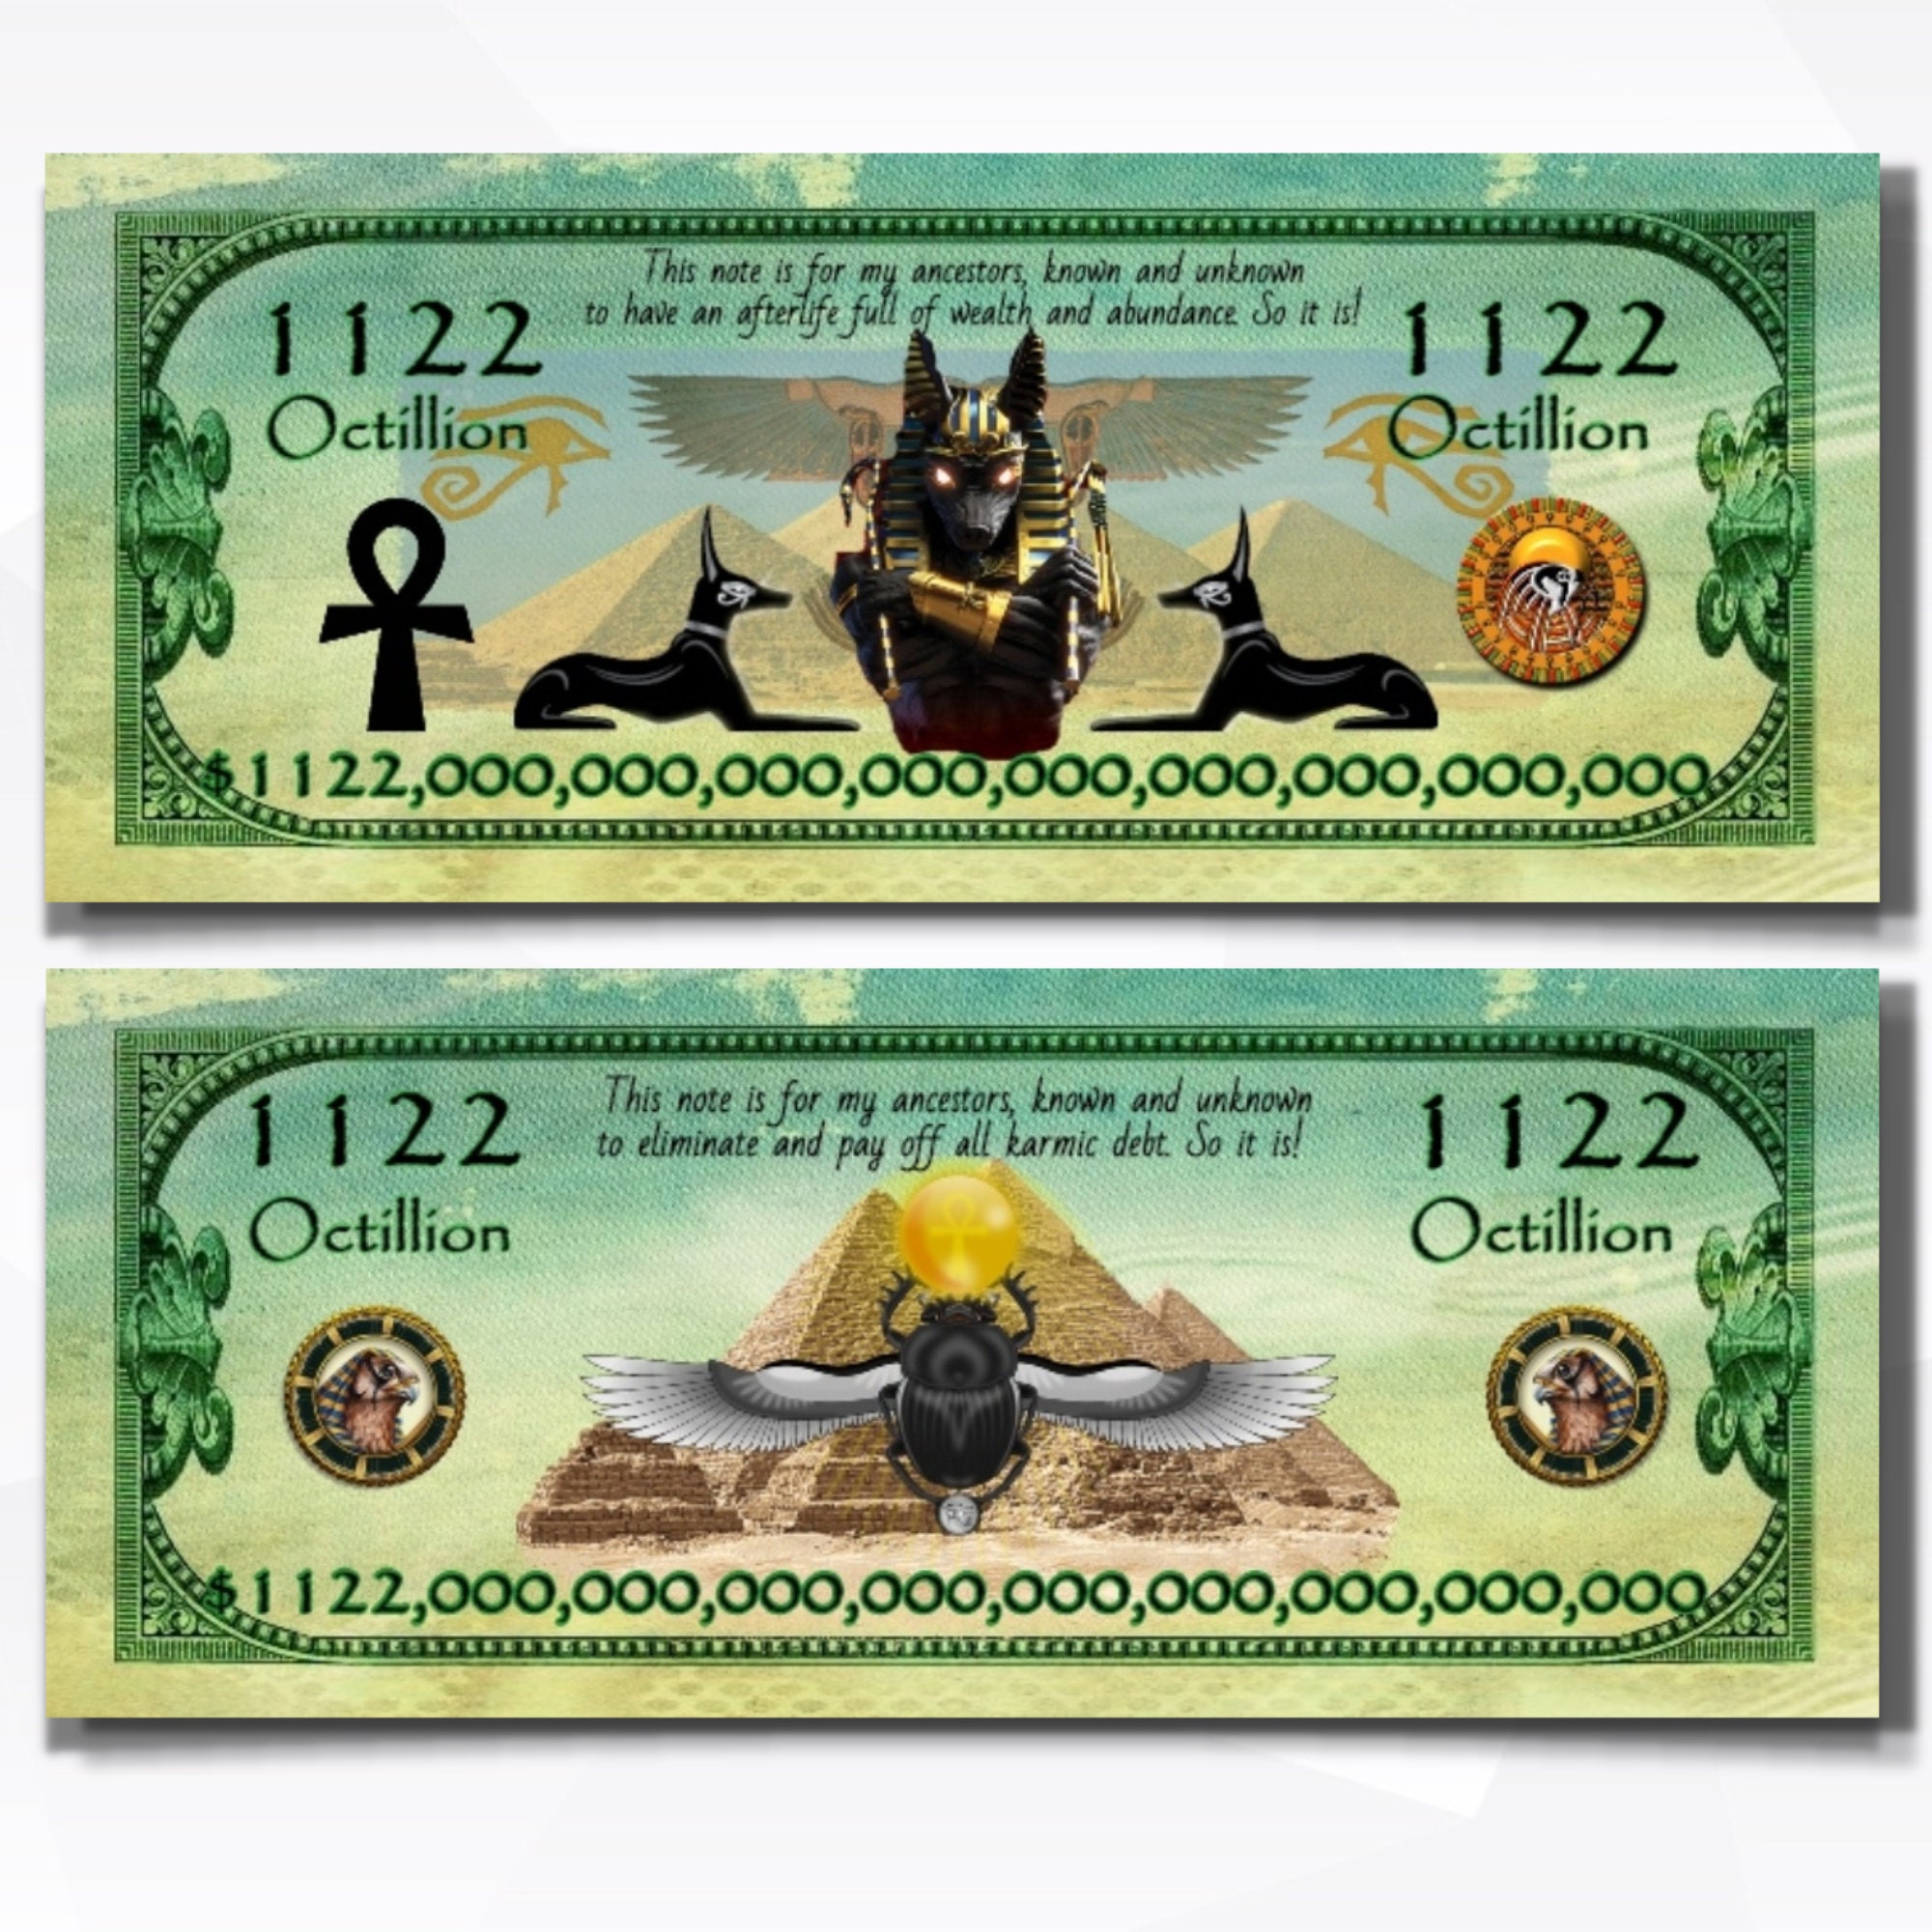 35 Piece Large Size Heaven Banknotes Ancestor Money Joss Paper-Ancestor Money to Burn,500 Billion Hell Banknotes 